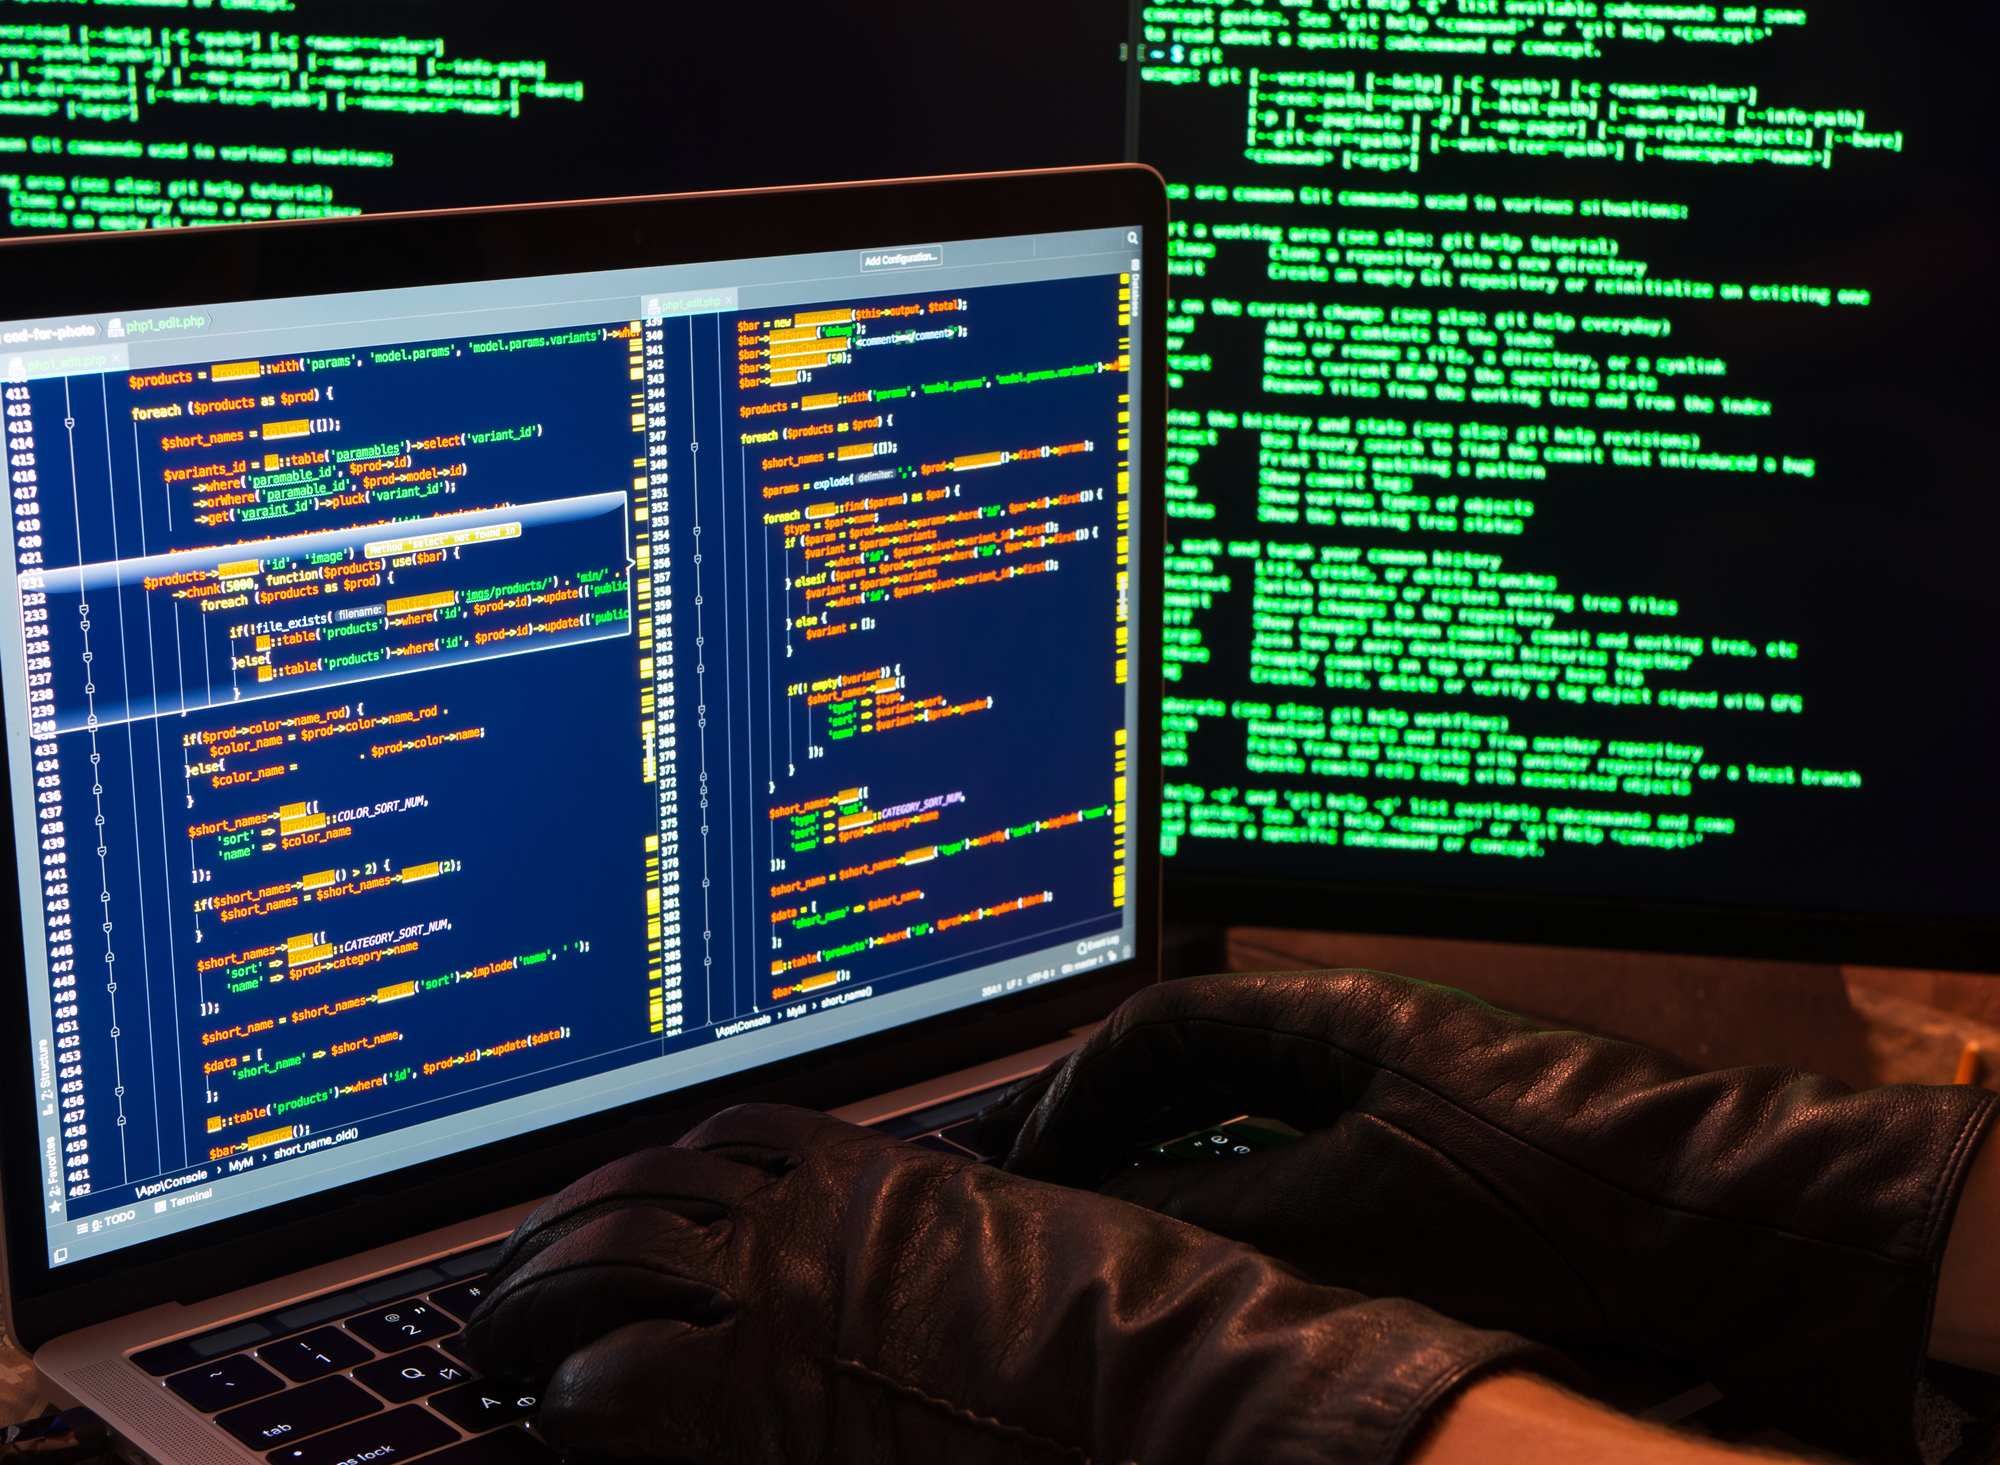 Hacker in computers regarding the LifeLabs cyberscurity breach class action lawsuit